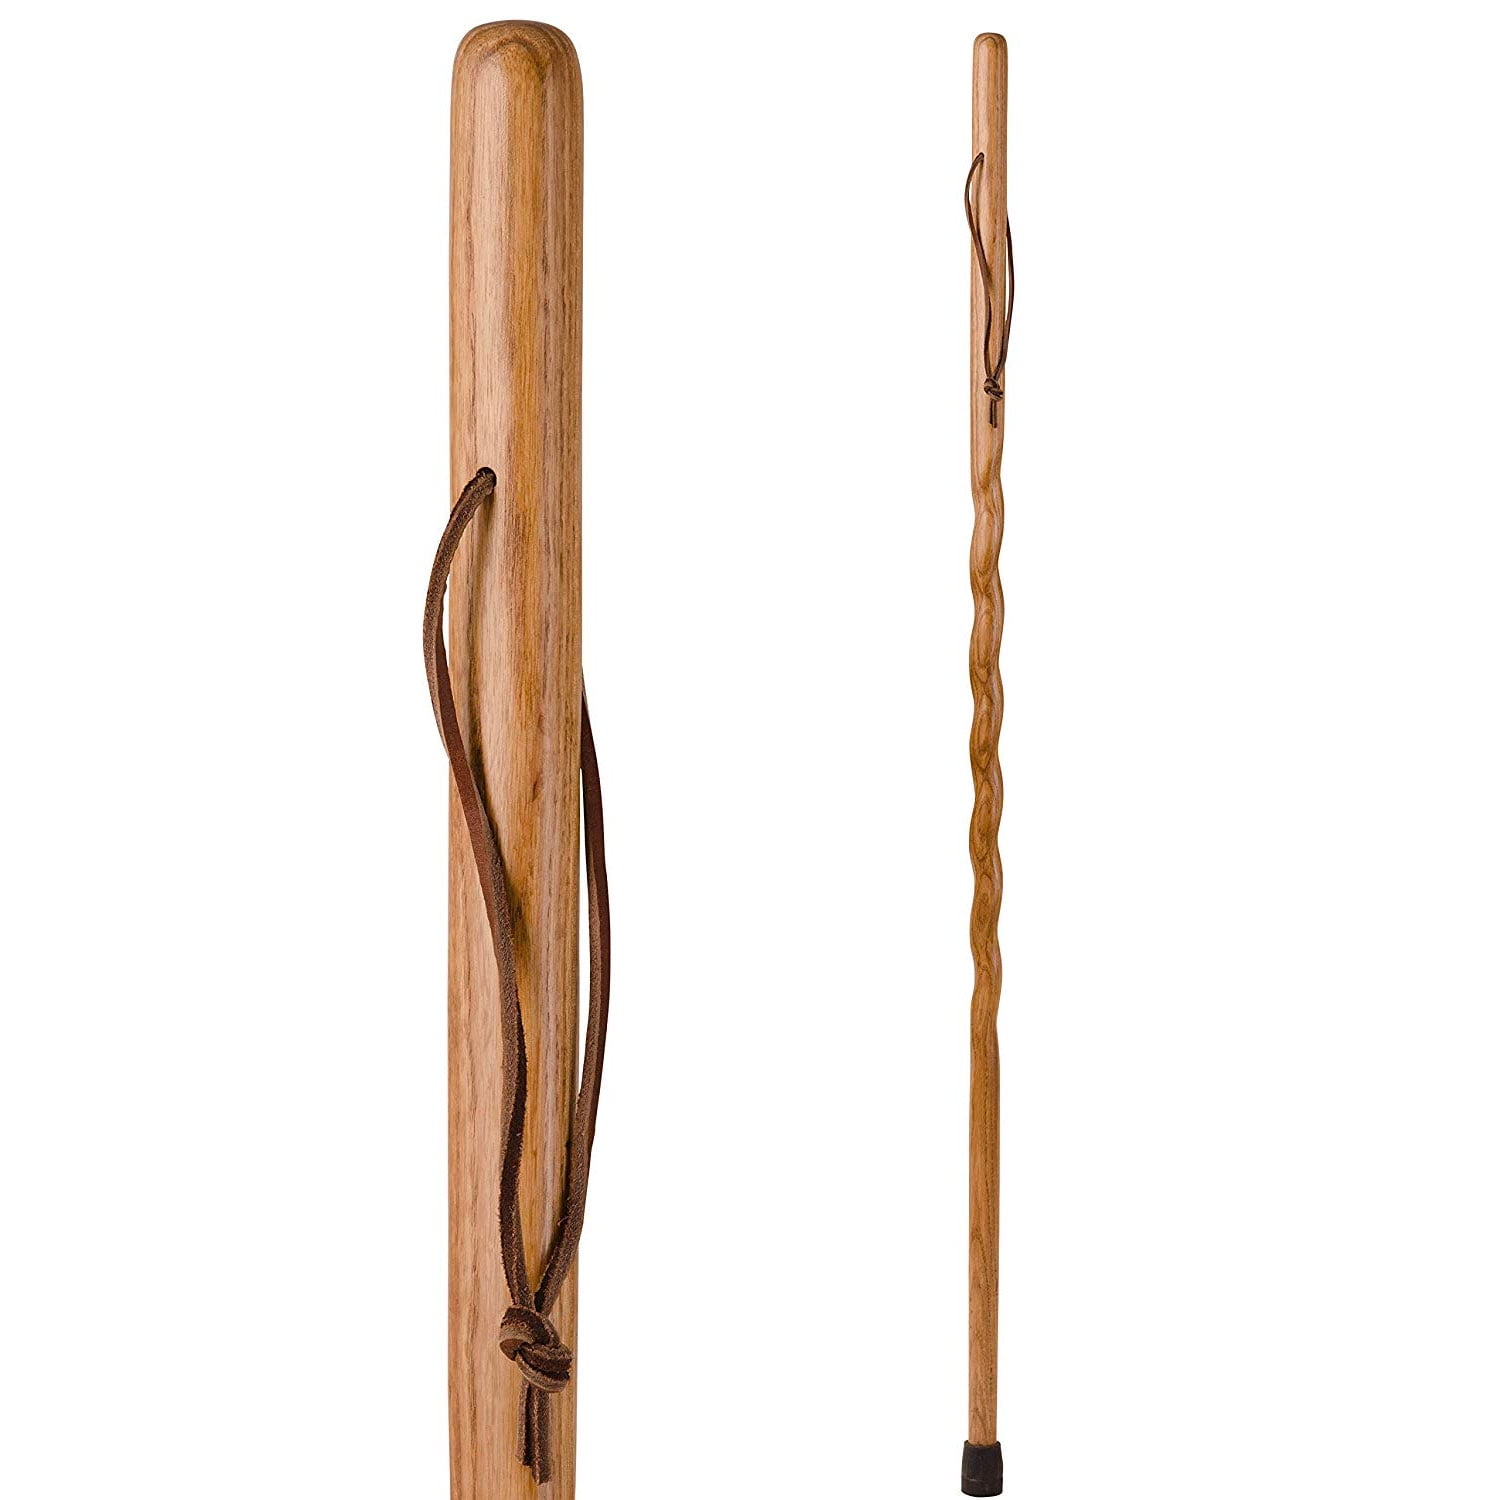 41 Tan Brazos Twisted Oak Handcrafted Wood Walking Stick Hiking Trekking Pole Cane